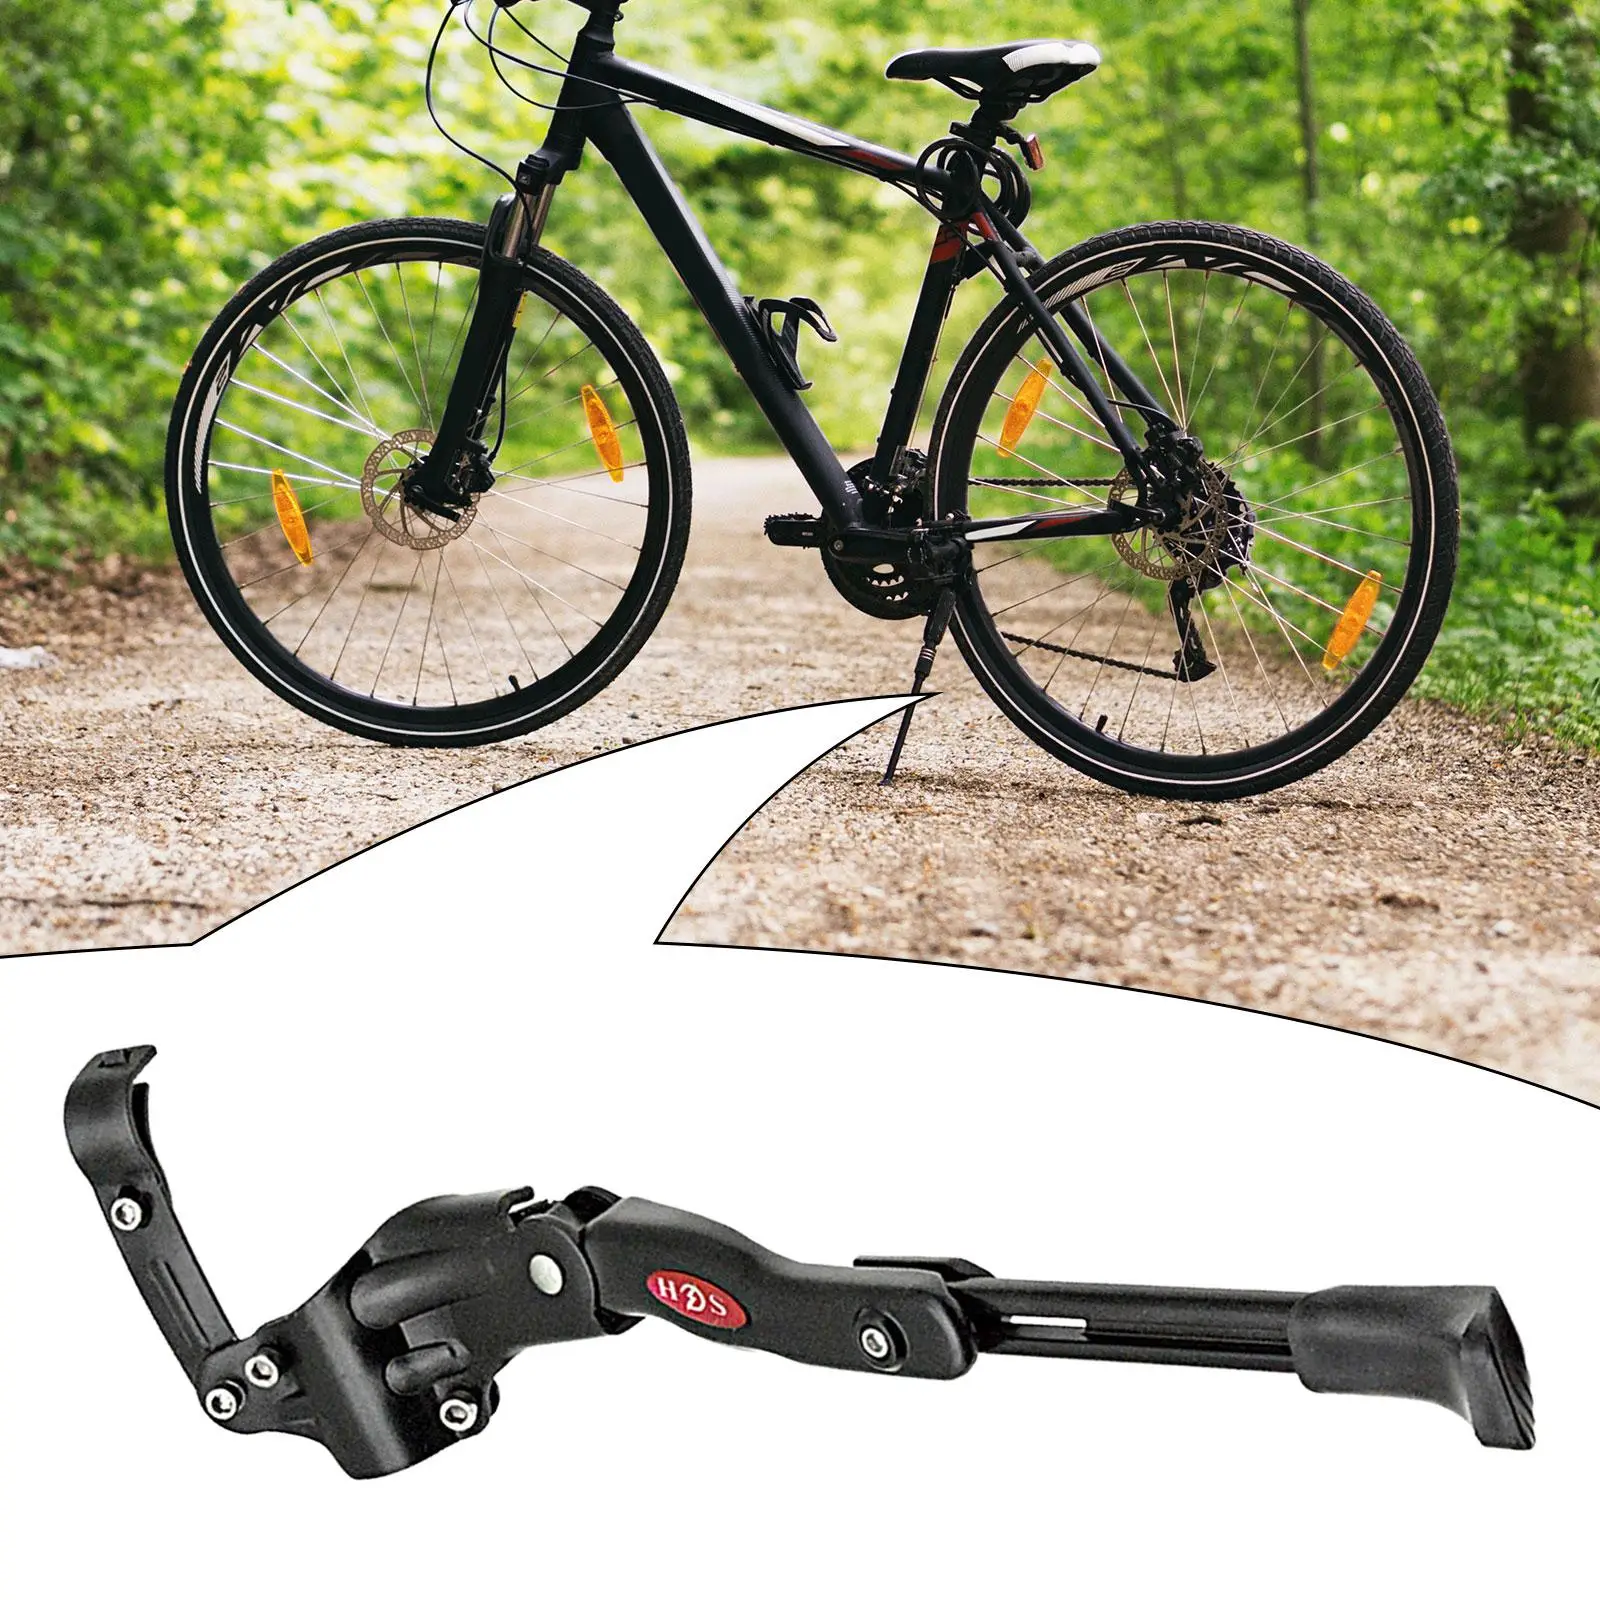 Bike Kickstand Foot Adjustable Length Cycling Accessories Bicycle Kick Stand